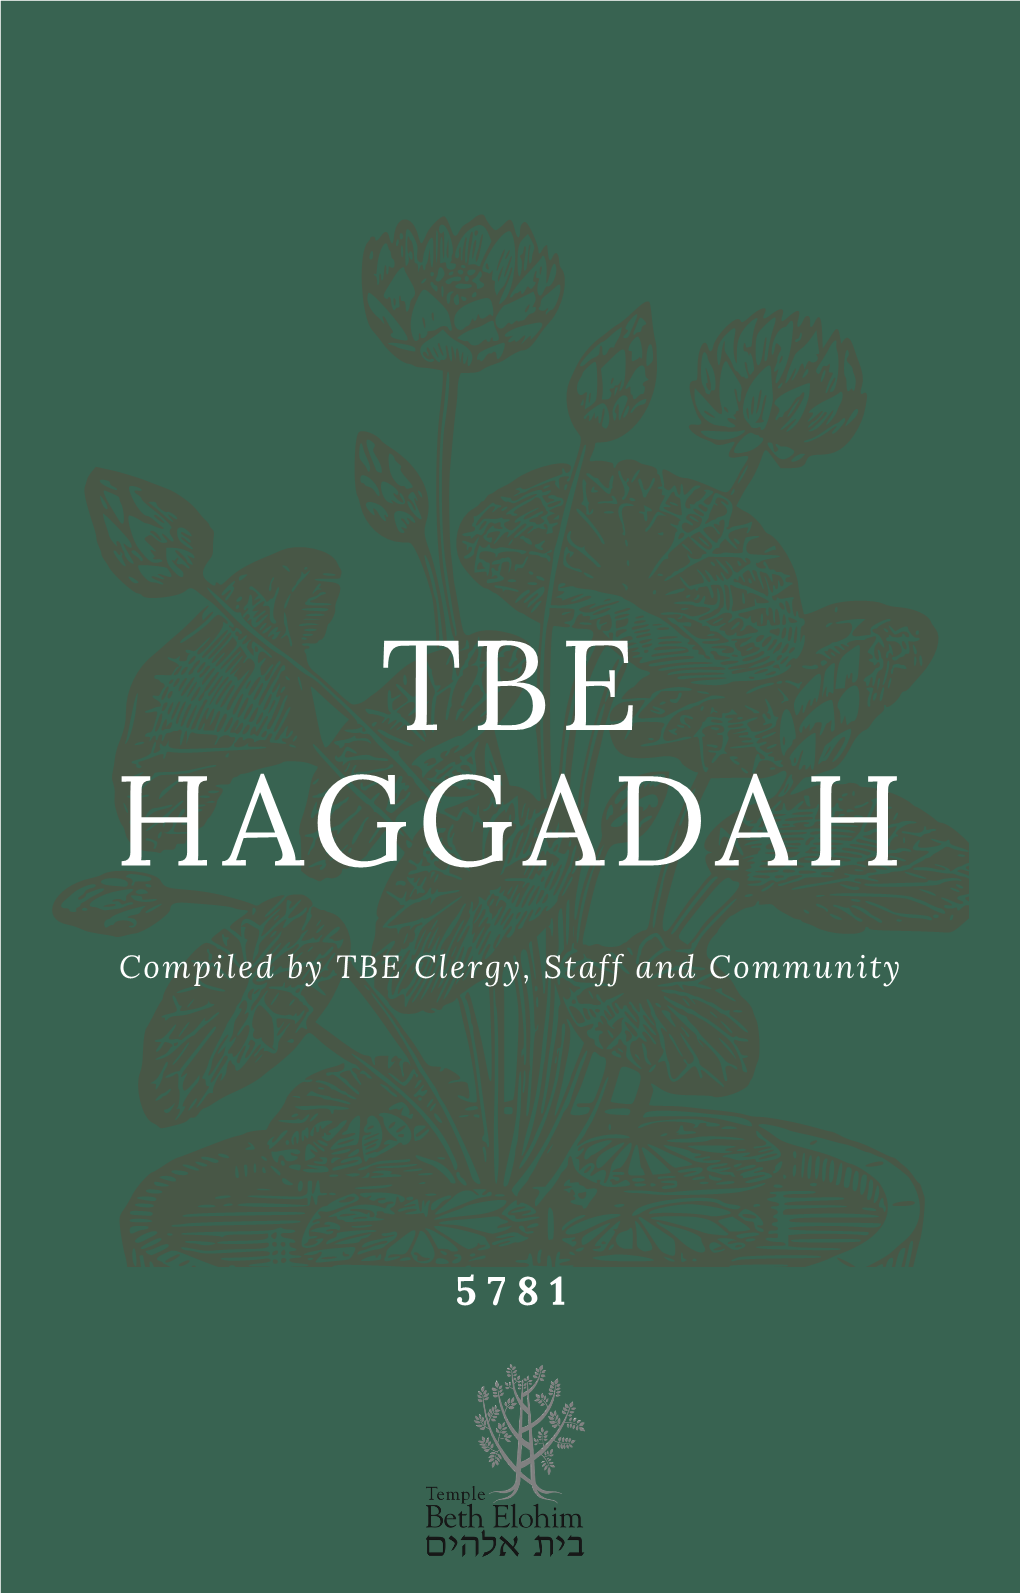 Tbe Haggadah